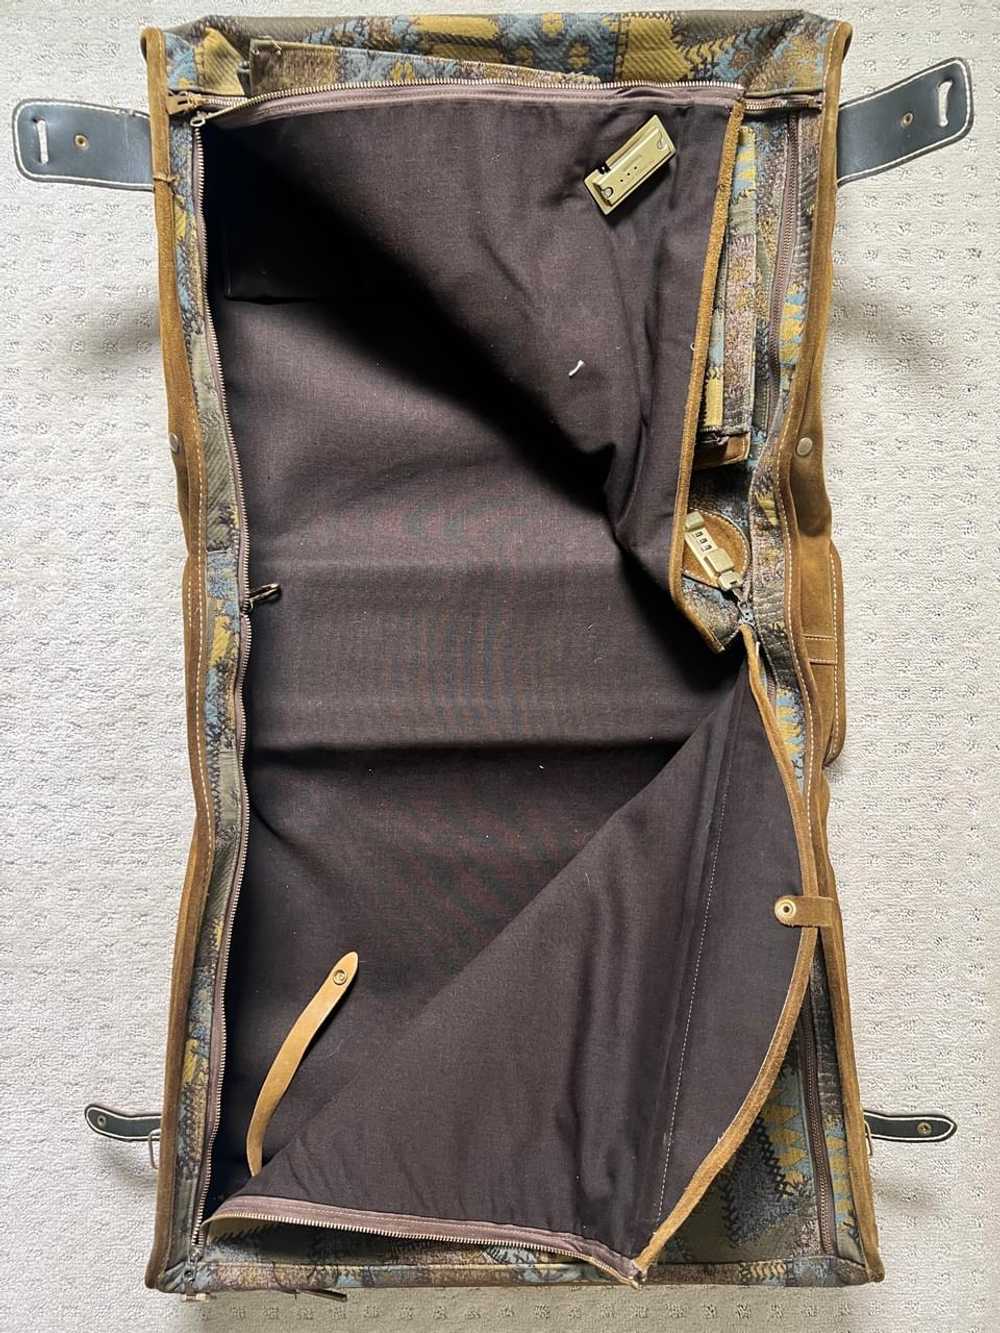 Garment bag or travel/storage suitcase - image 3